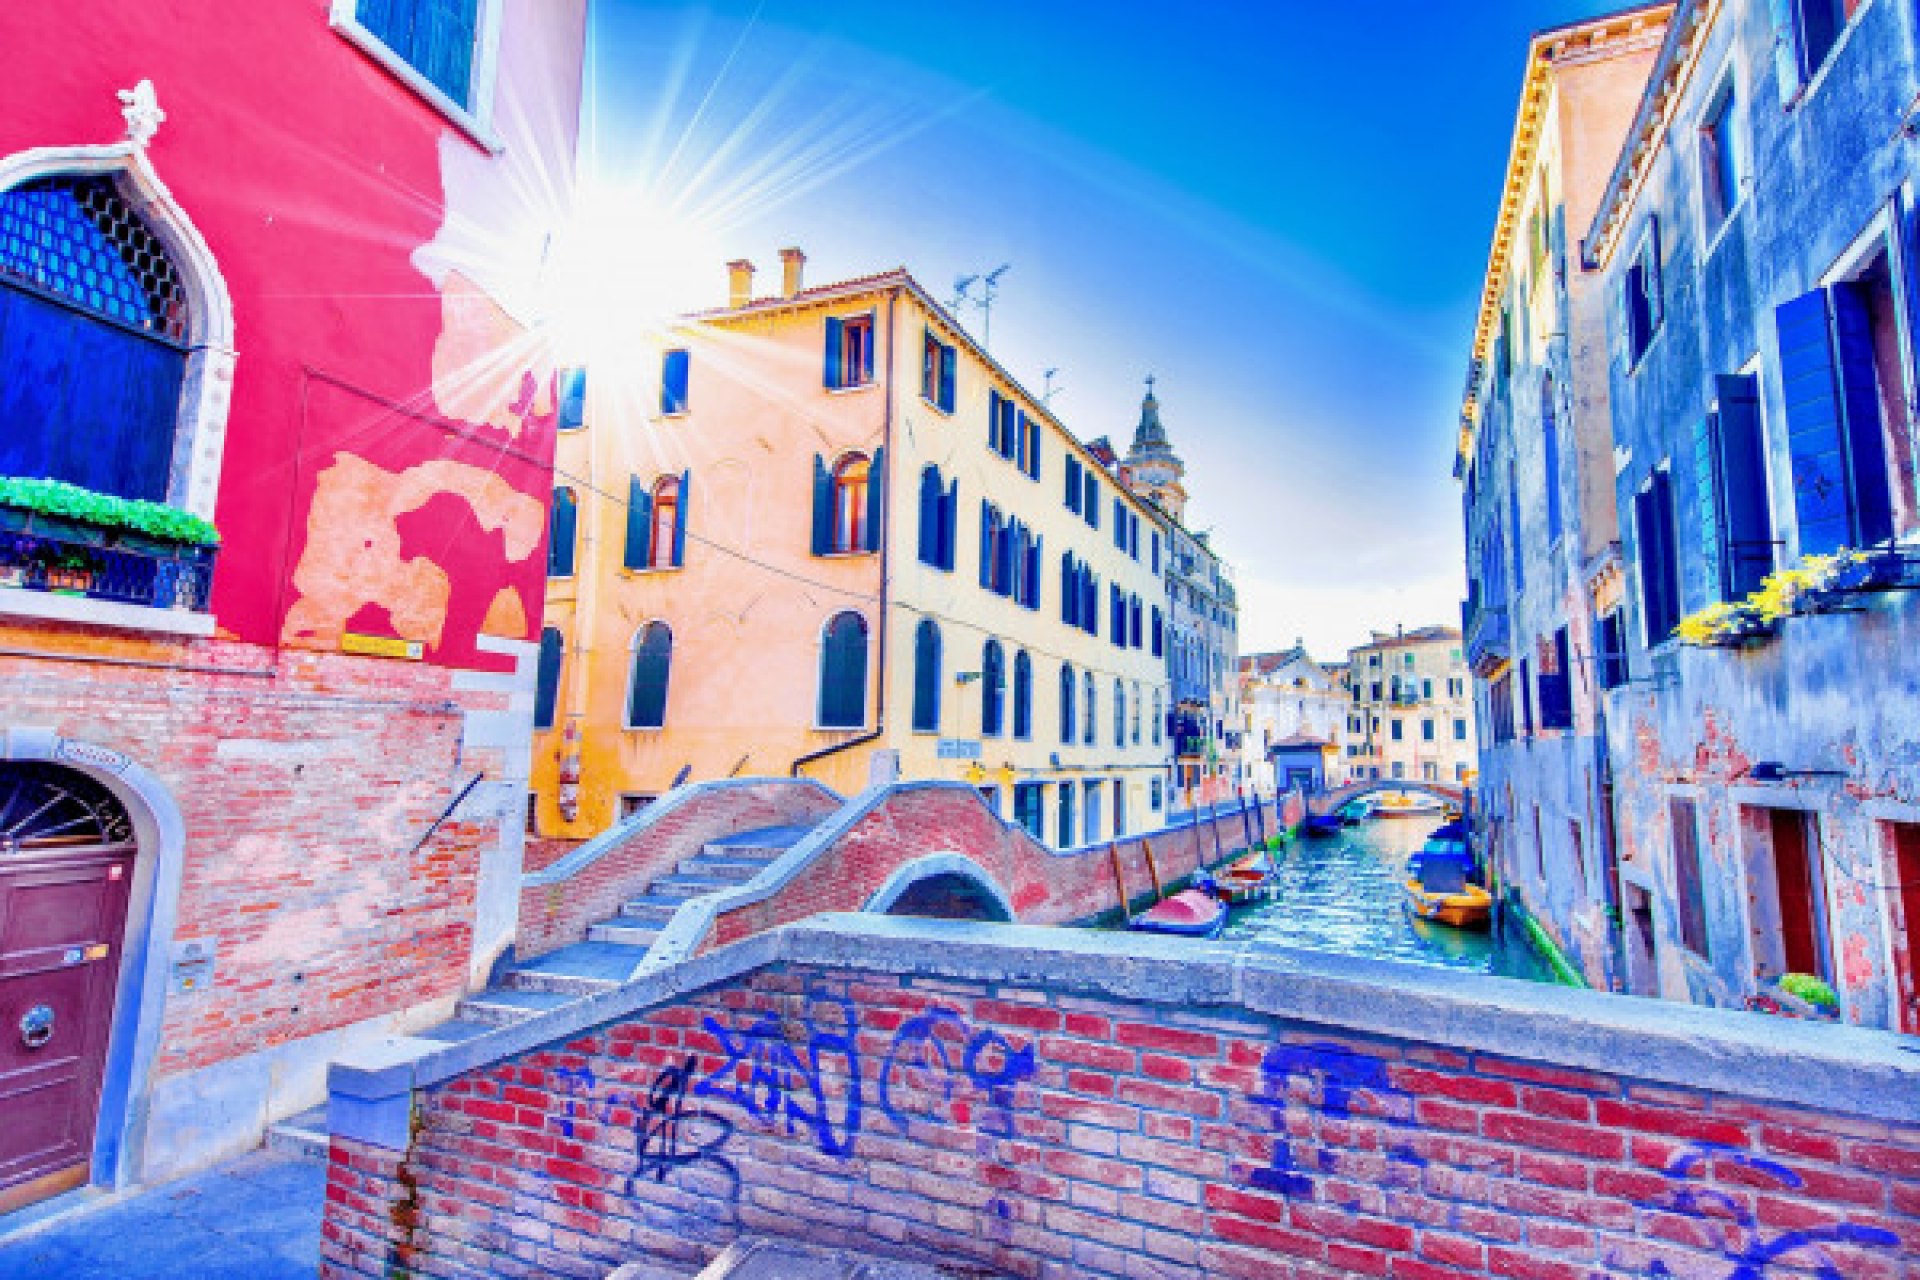 Venice Walking tour, Basilica and Gondola